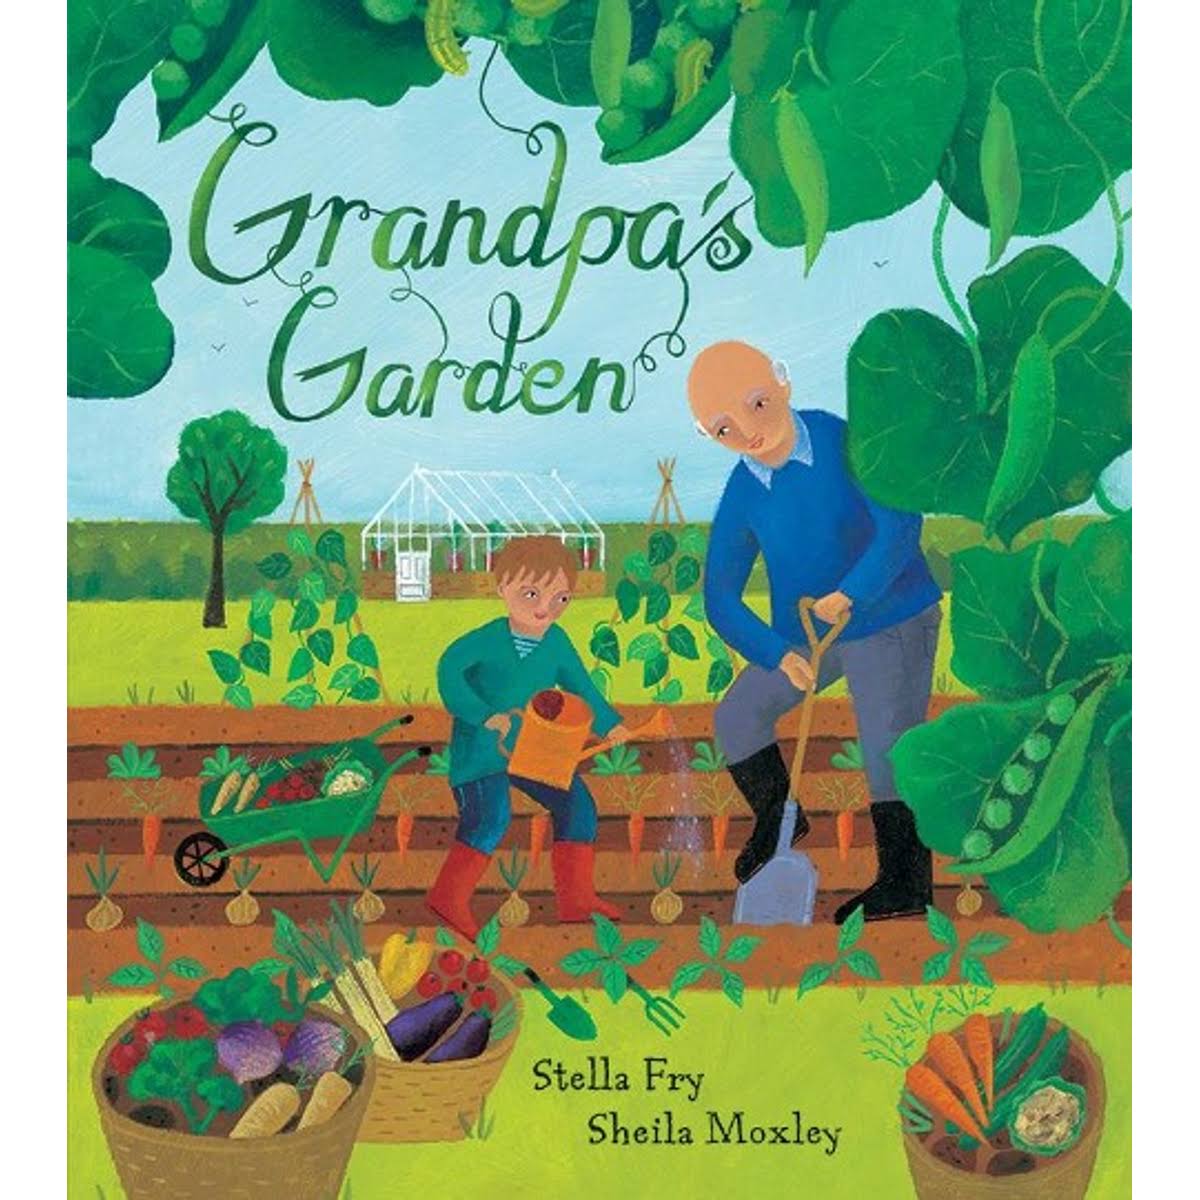 Grandpa's Garden by Stella Fry